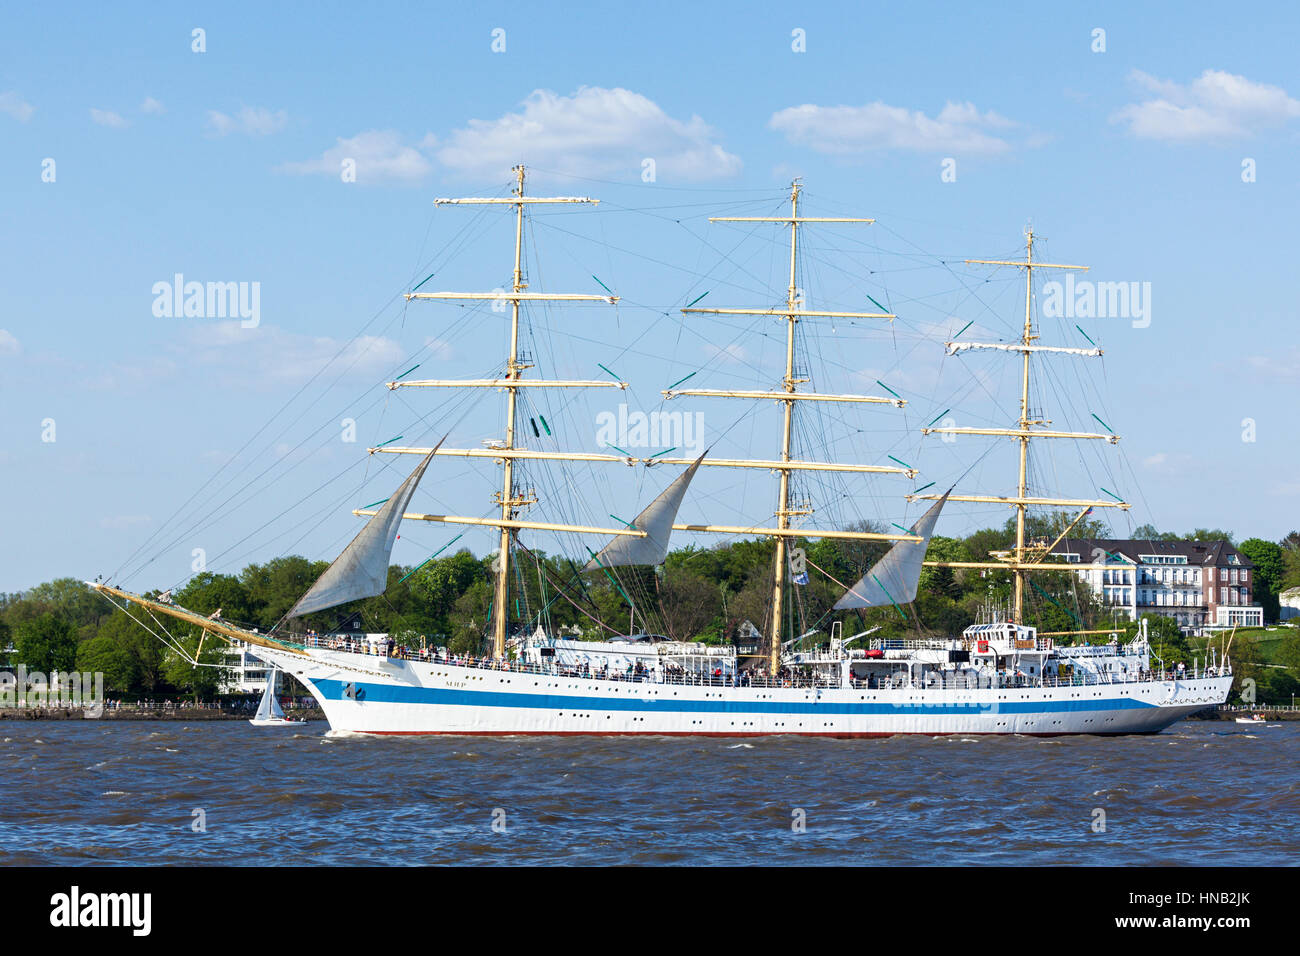 Hamburg, Germany - May 8, 2016: Russian three-masted sailing ship MIR on the Elbe river during the departure parade of 827th Hamburg Port Anniversary Stock Photo